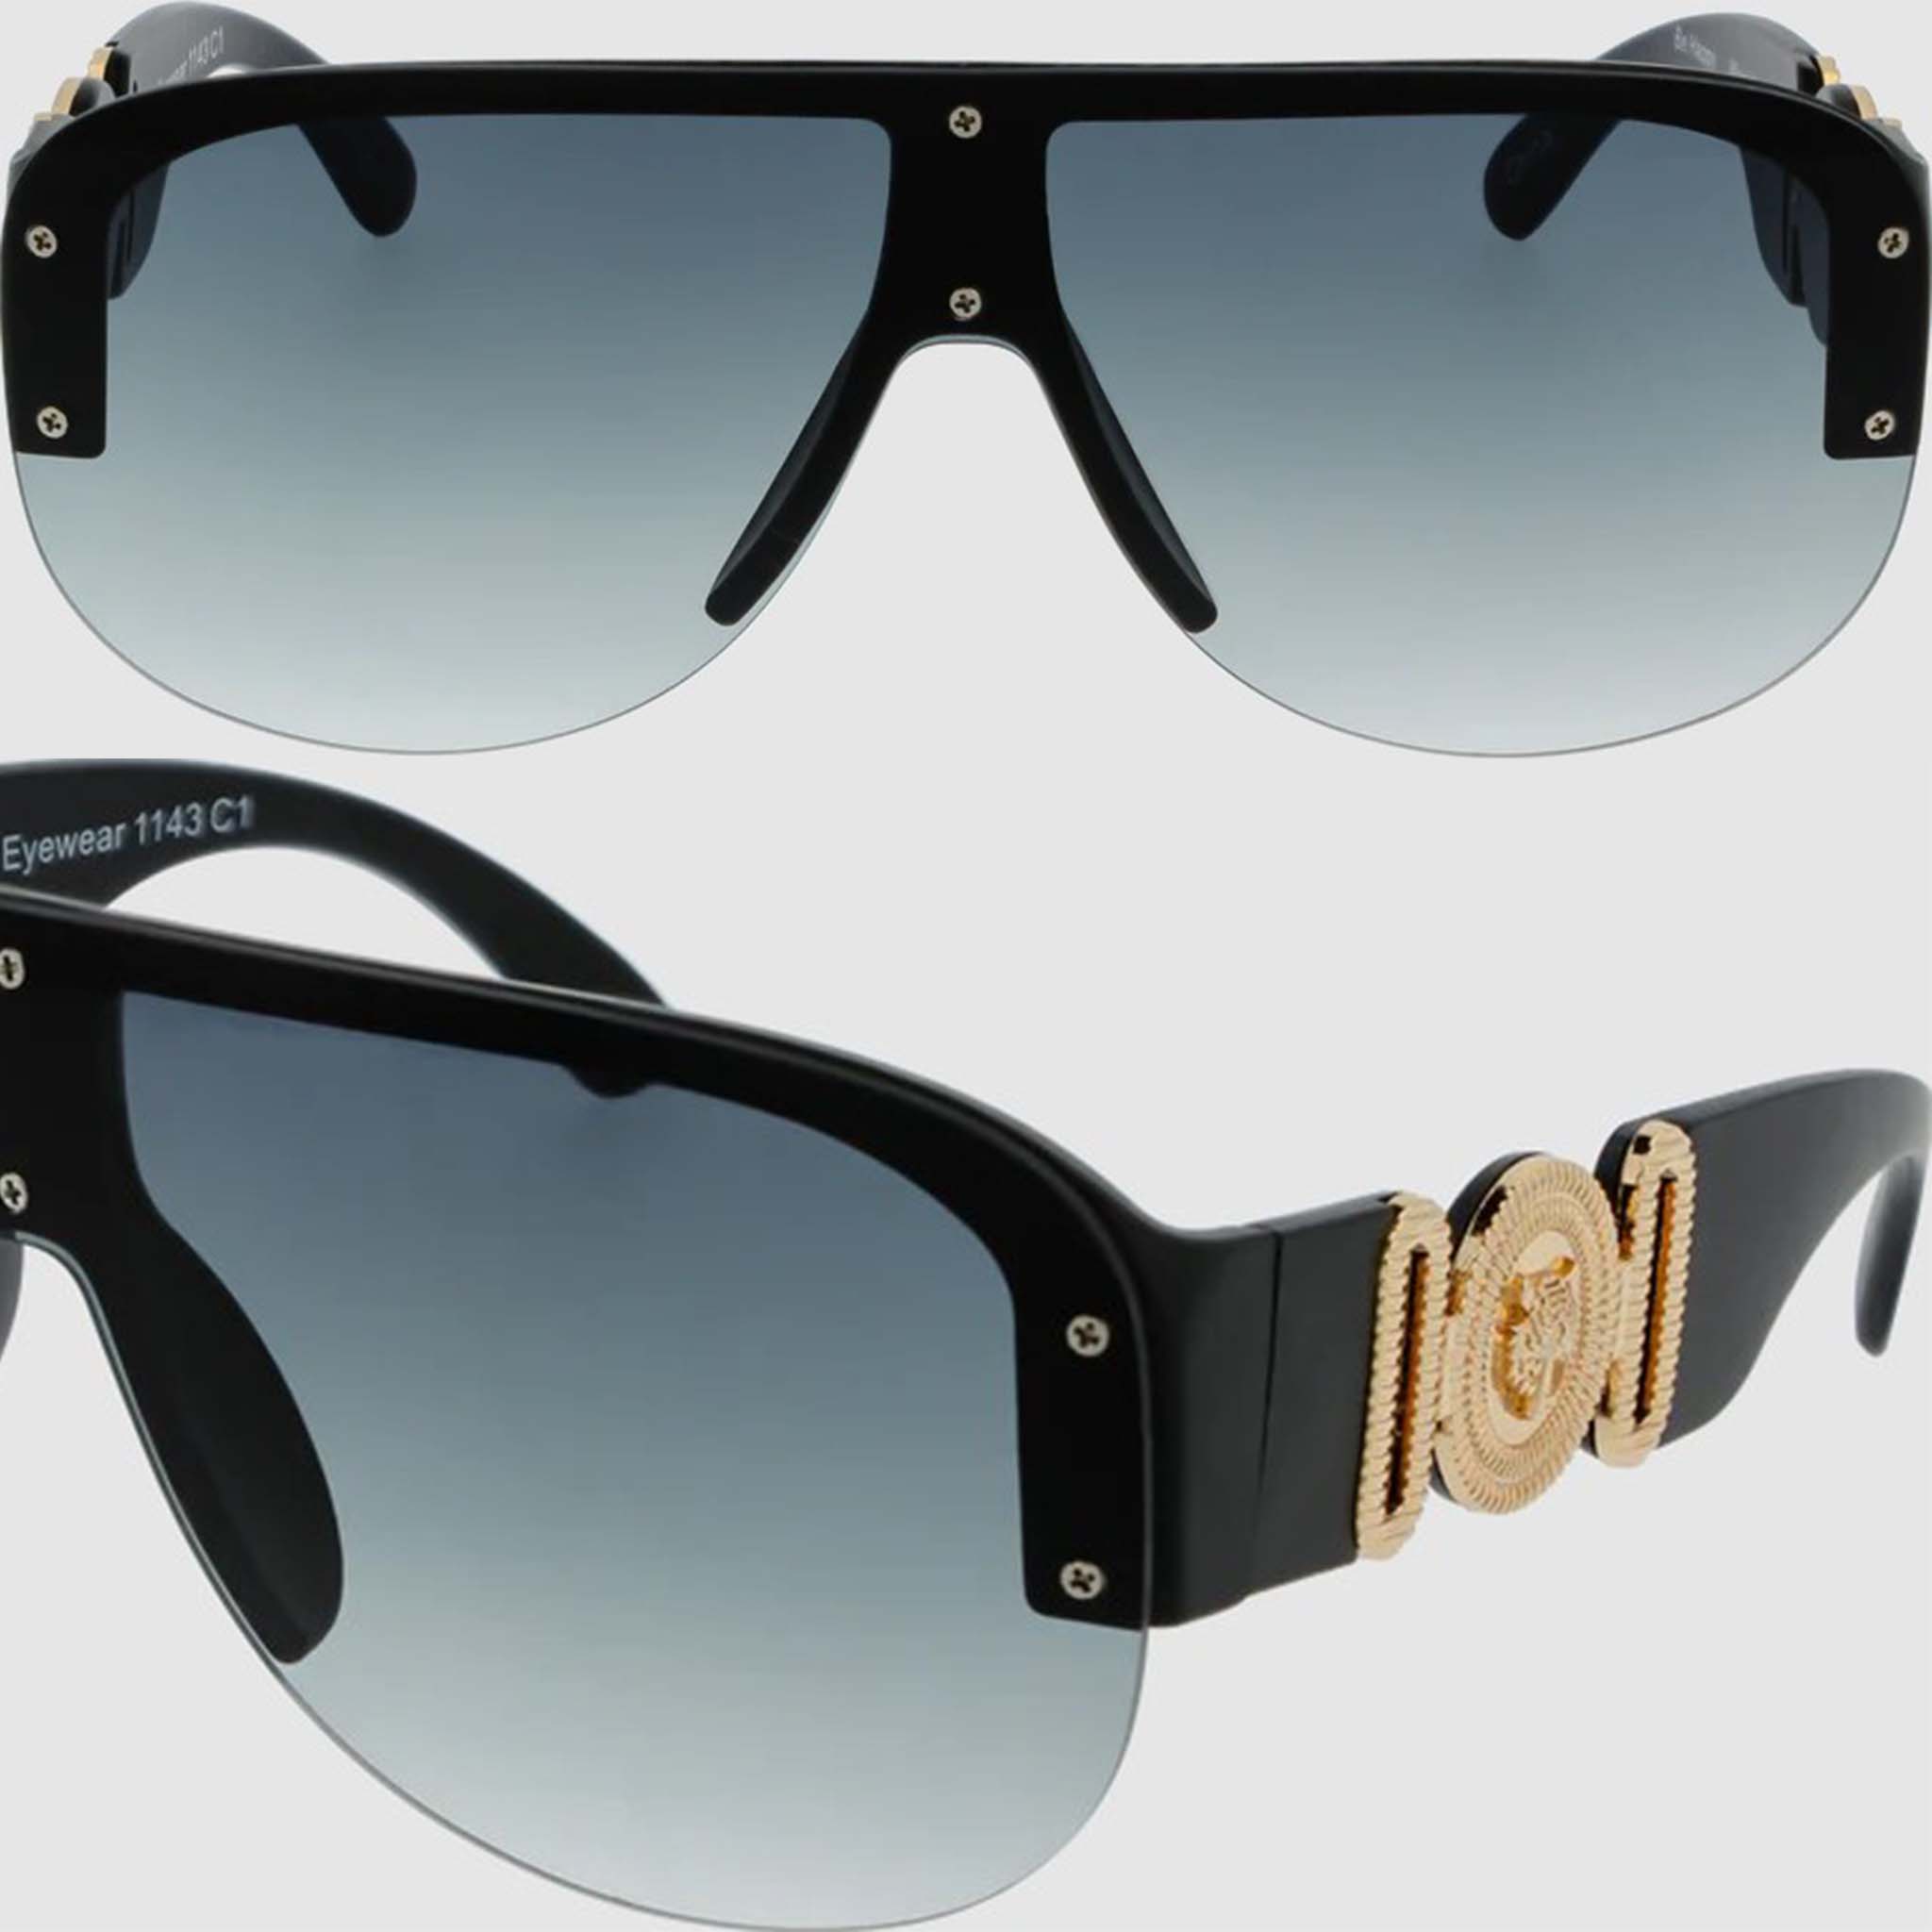 Ego Fashion Sunglasses DKFL1143